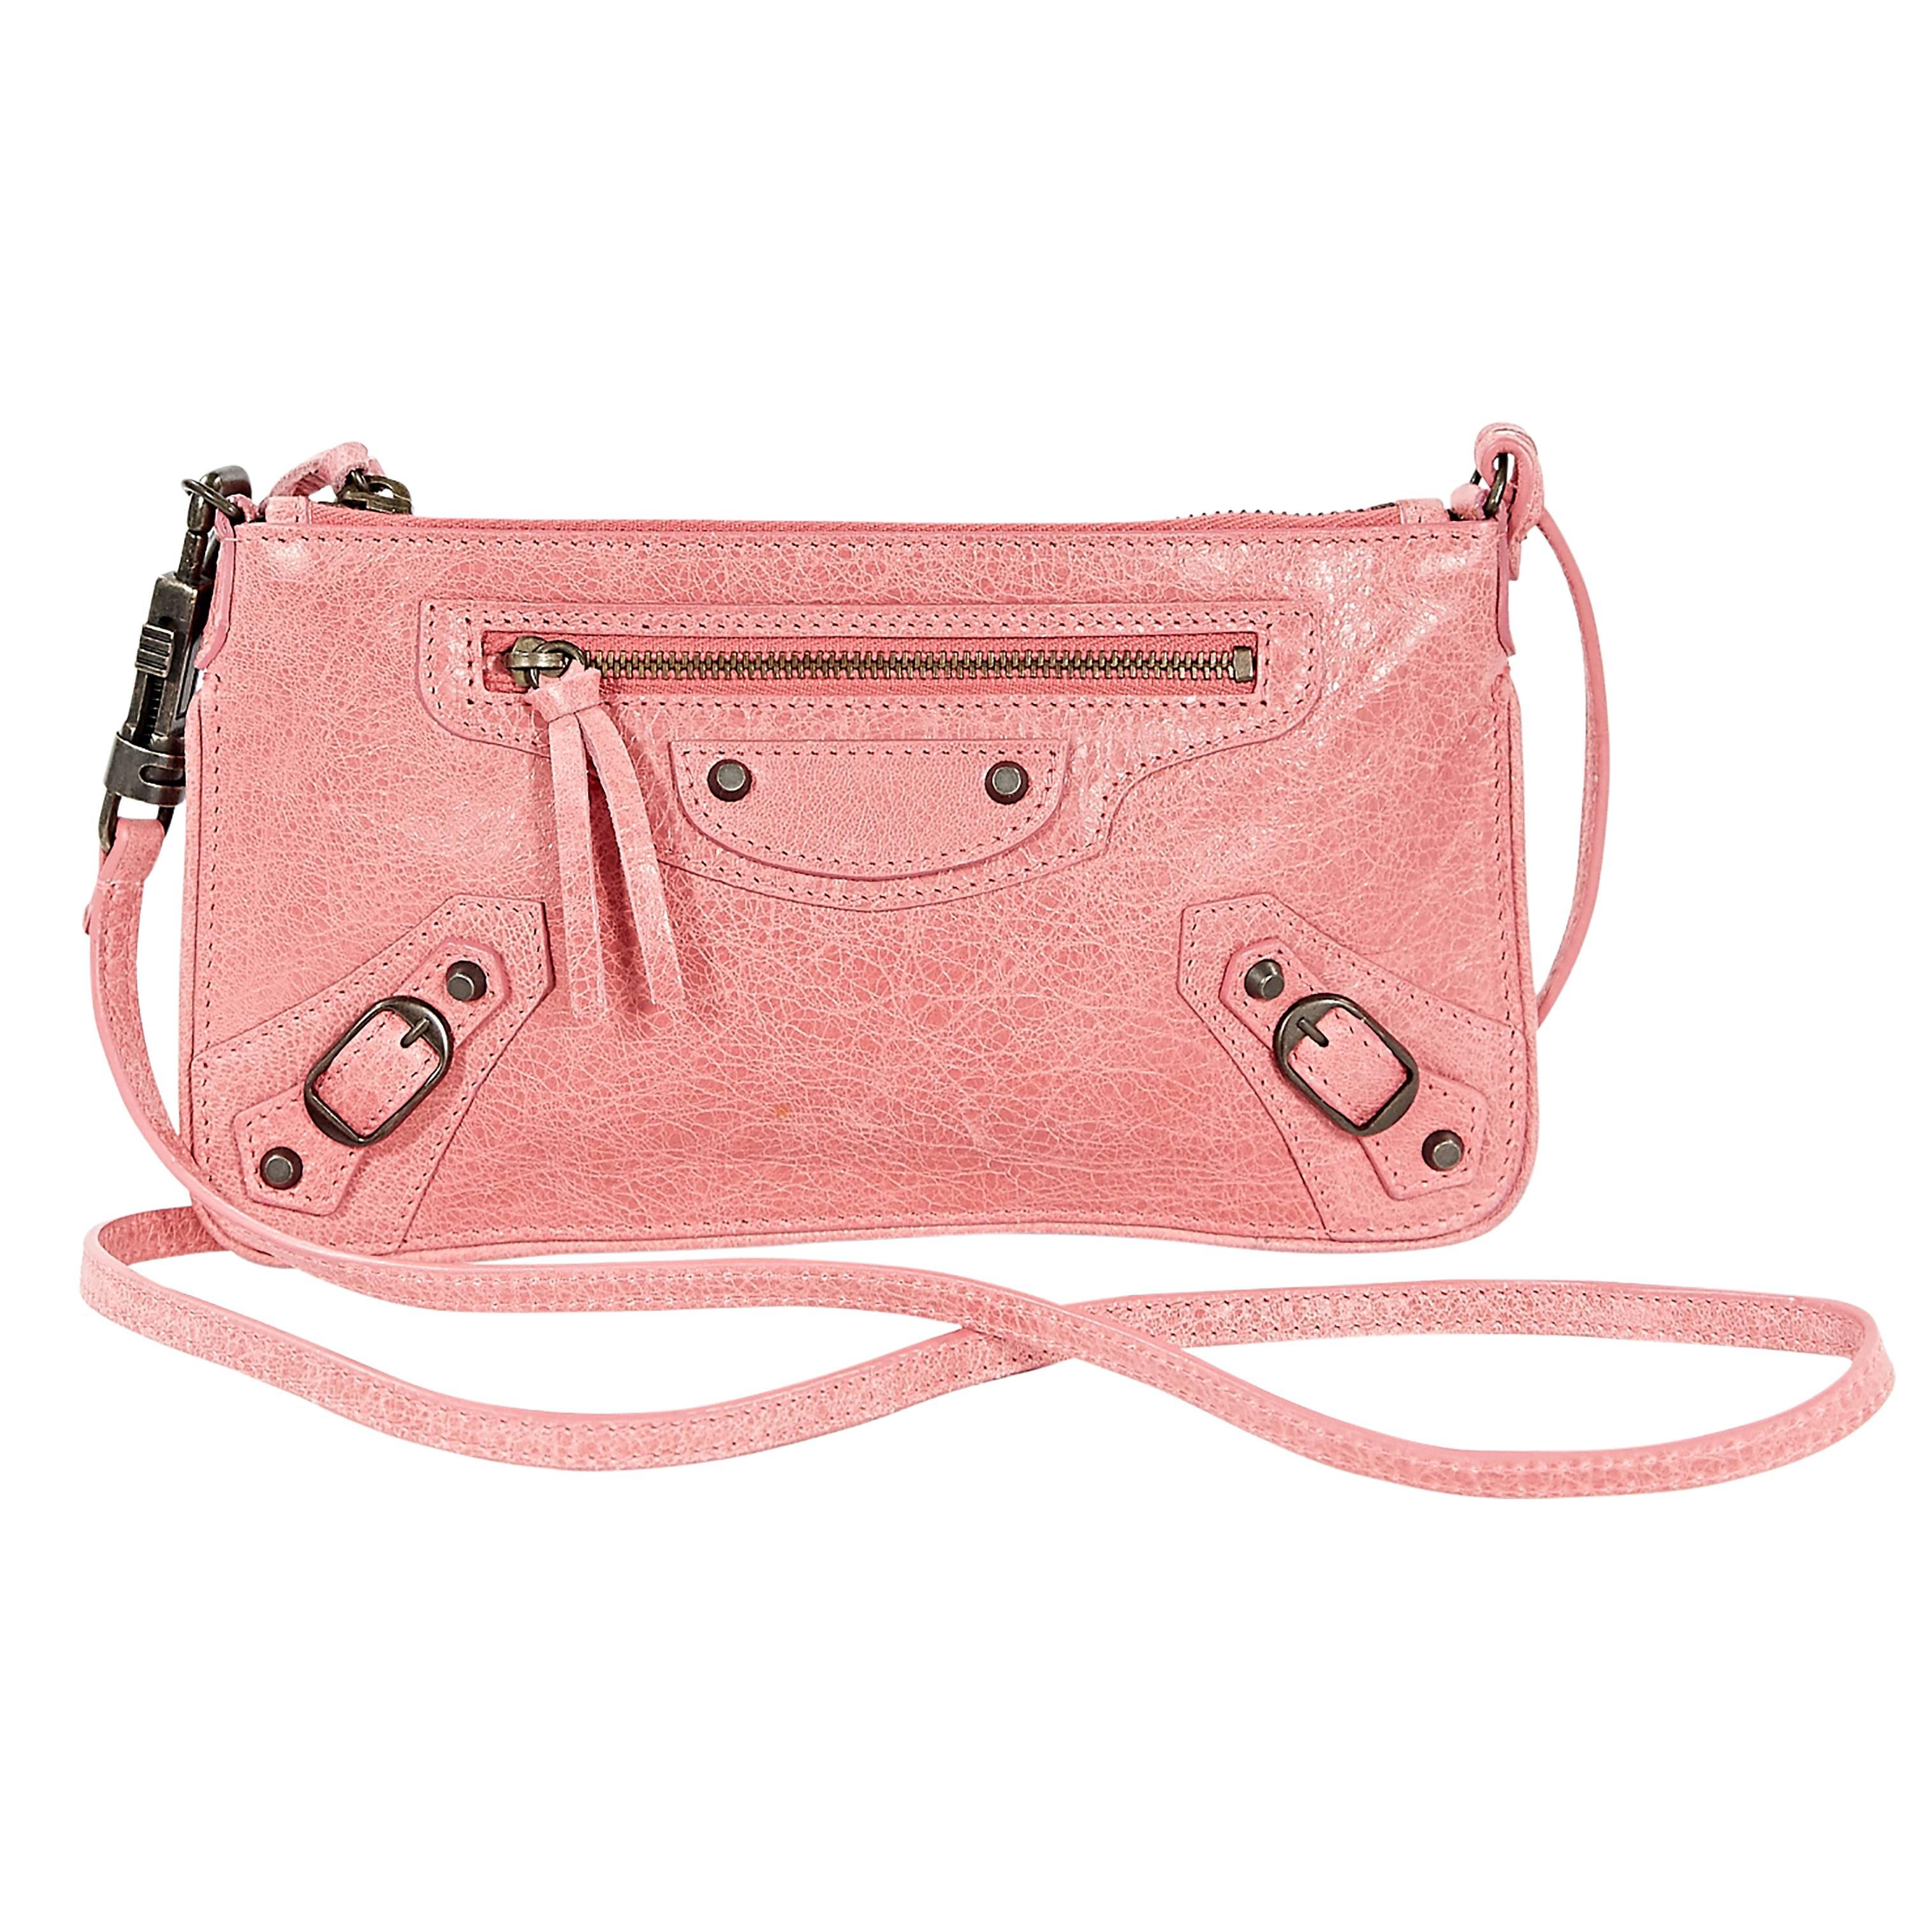 Pink Balenciaga Leather Crossbody Bag